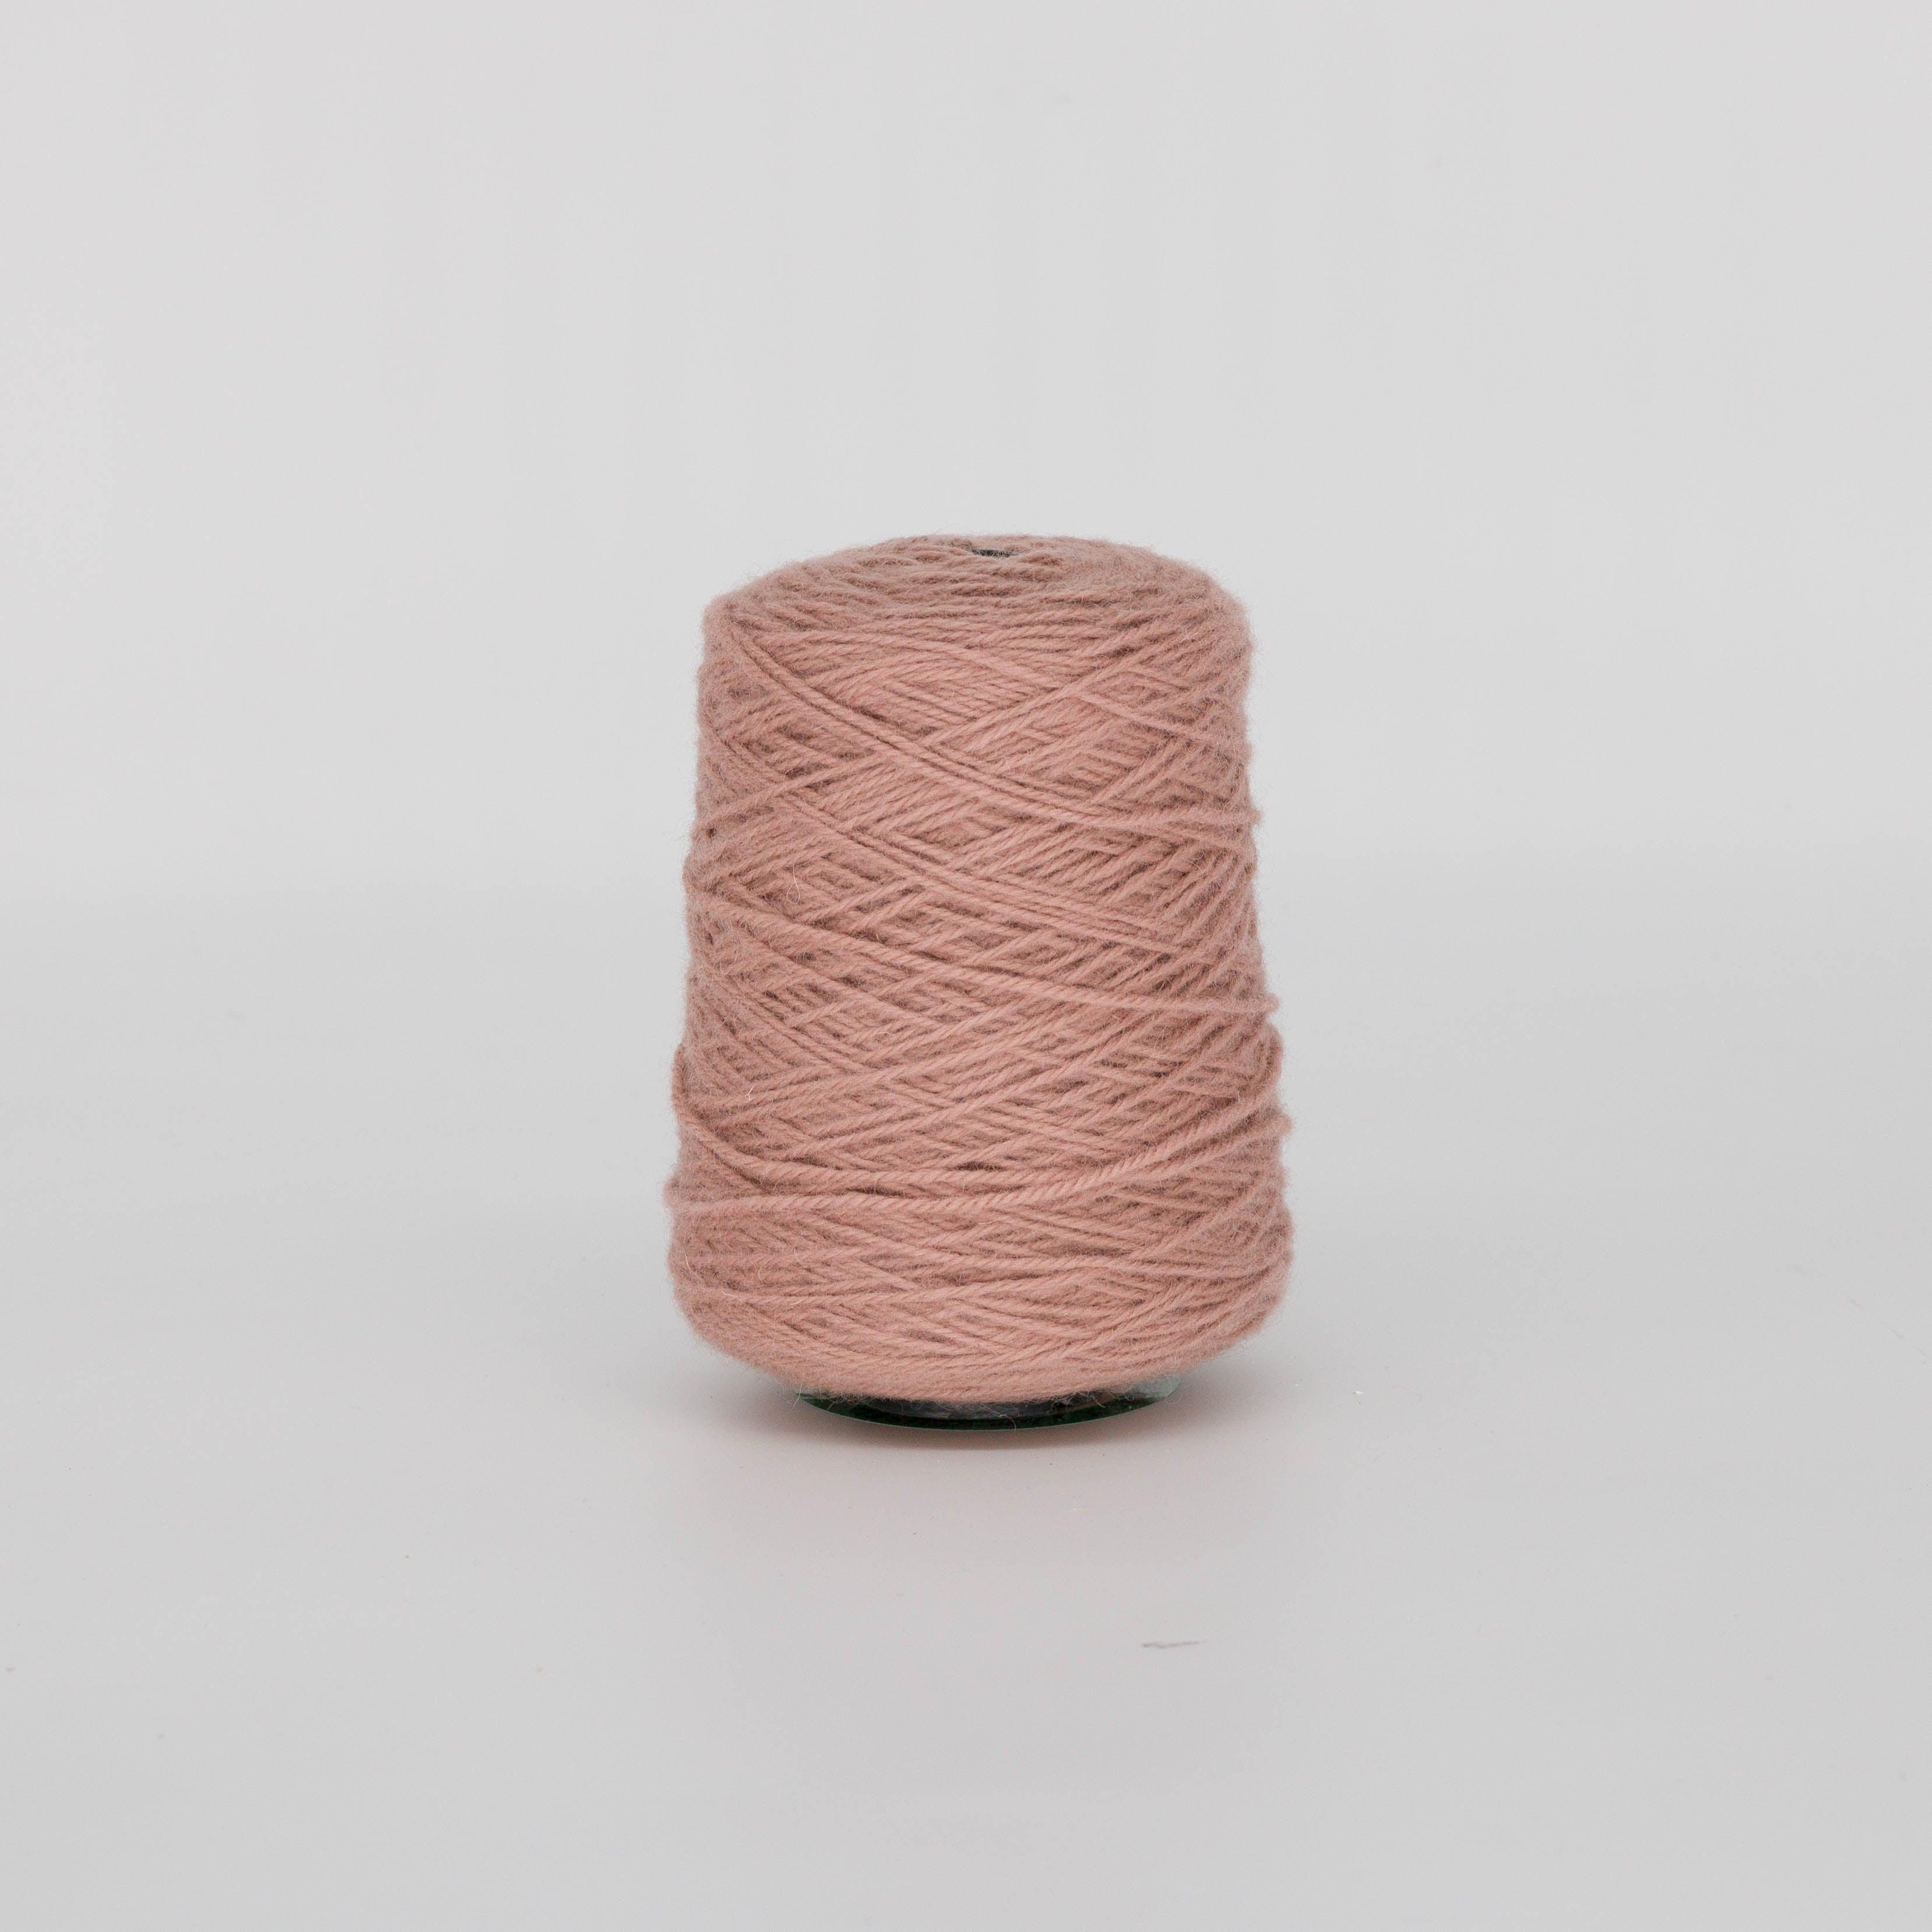 Dusty pink 100% Wool Rug Yarn On Cones (336) - Tuftingshop